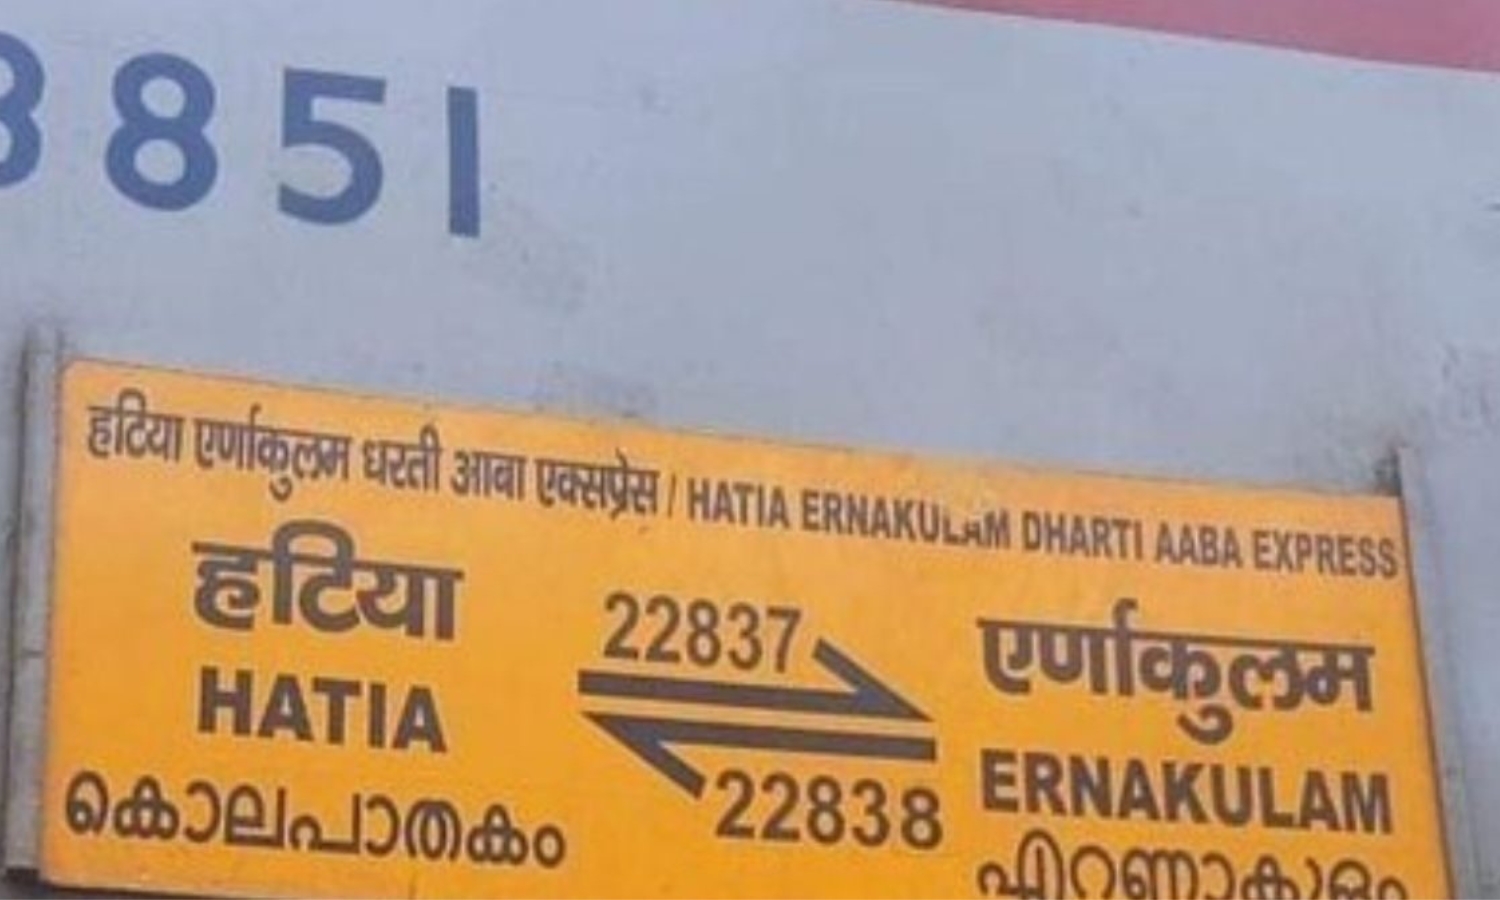 Indian Railways Blunder: 'Murder Express' Name Goes Viral Due to Translation Error